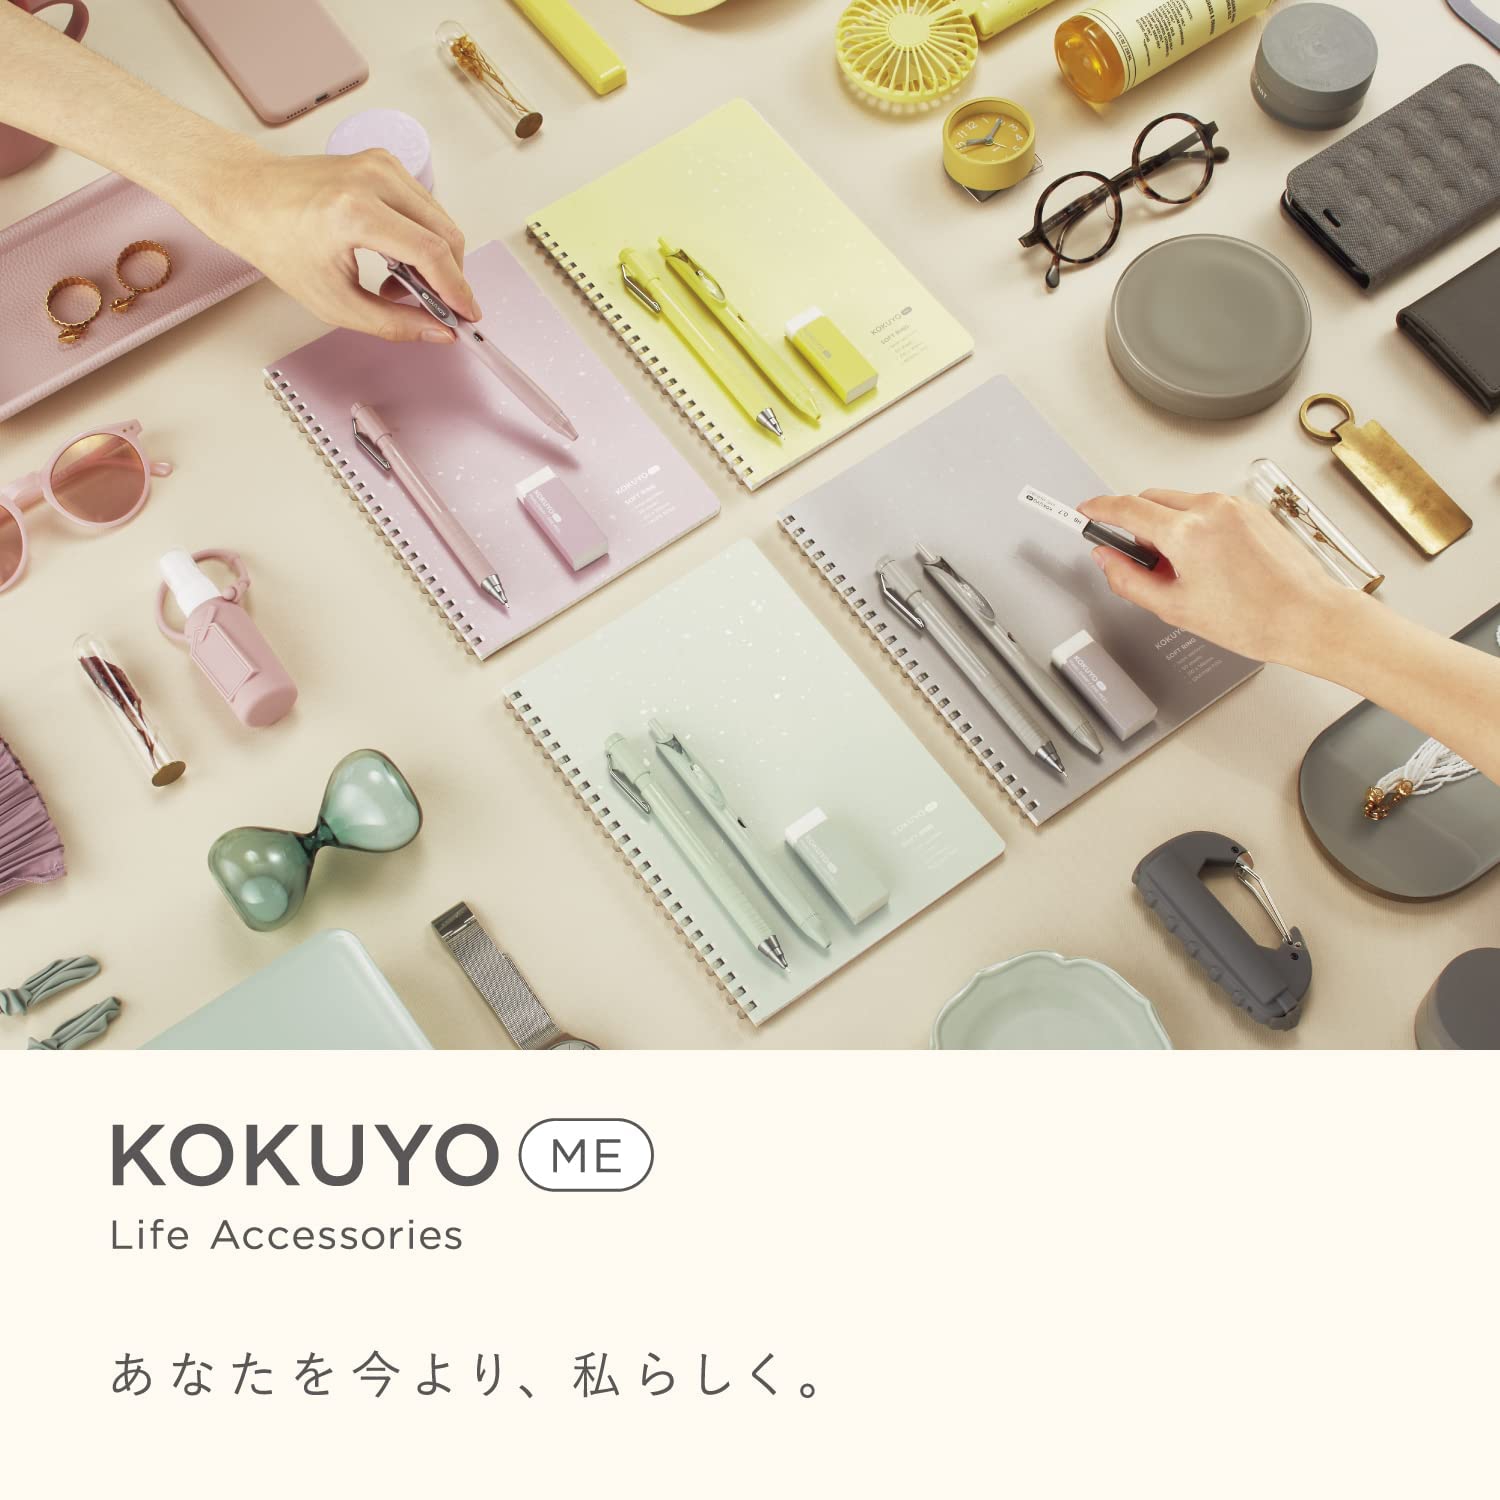 KOKUYO(コクヨ) ME ボールペンの商品画像サムネ6 